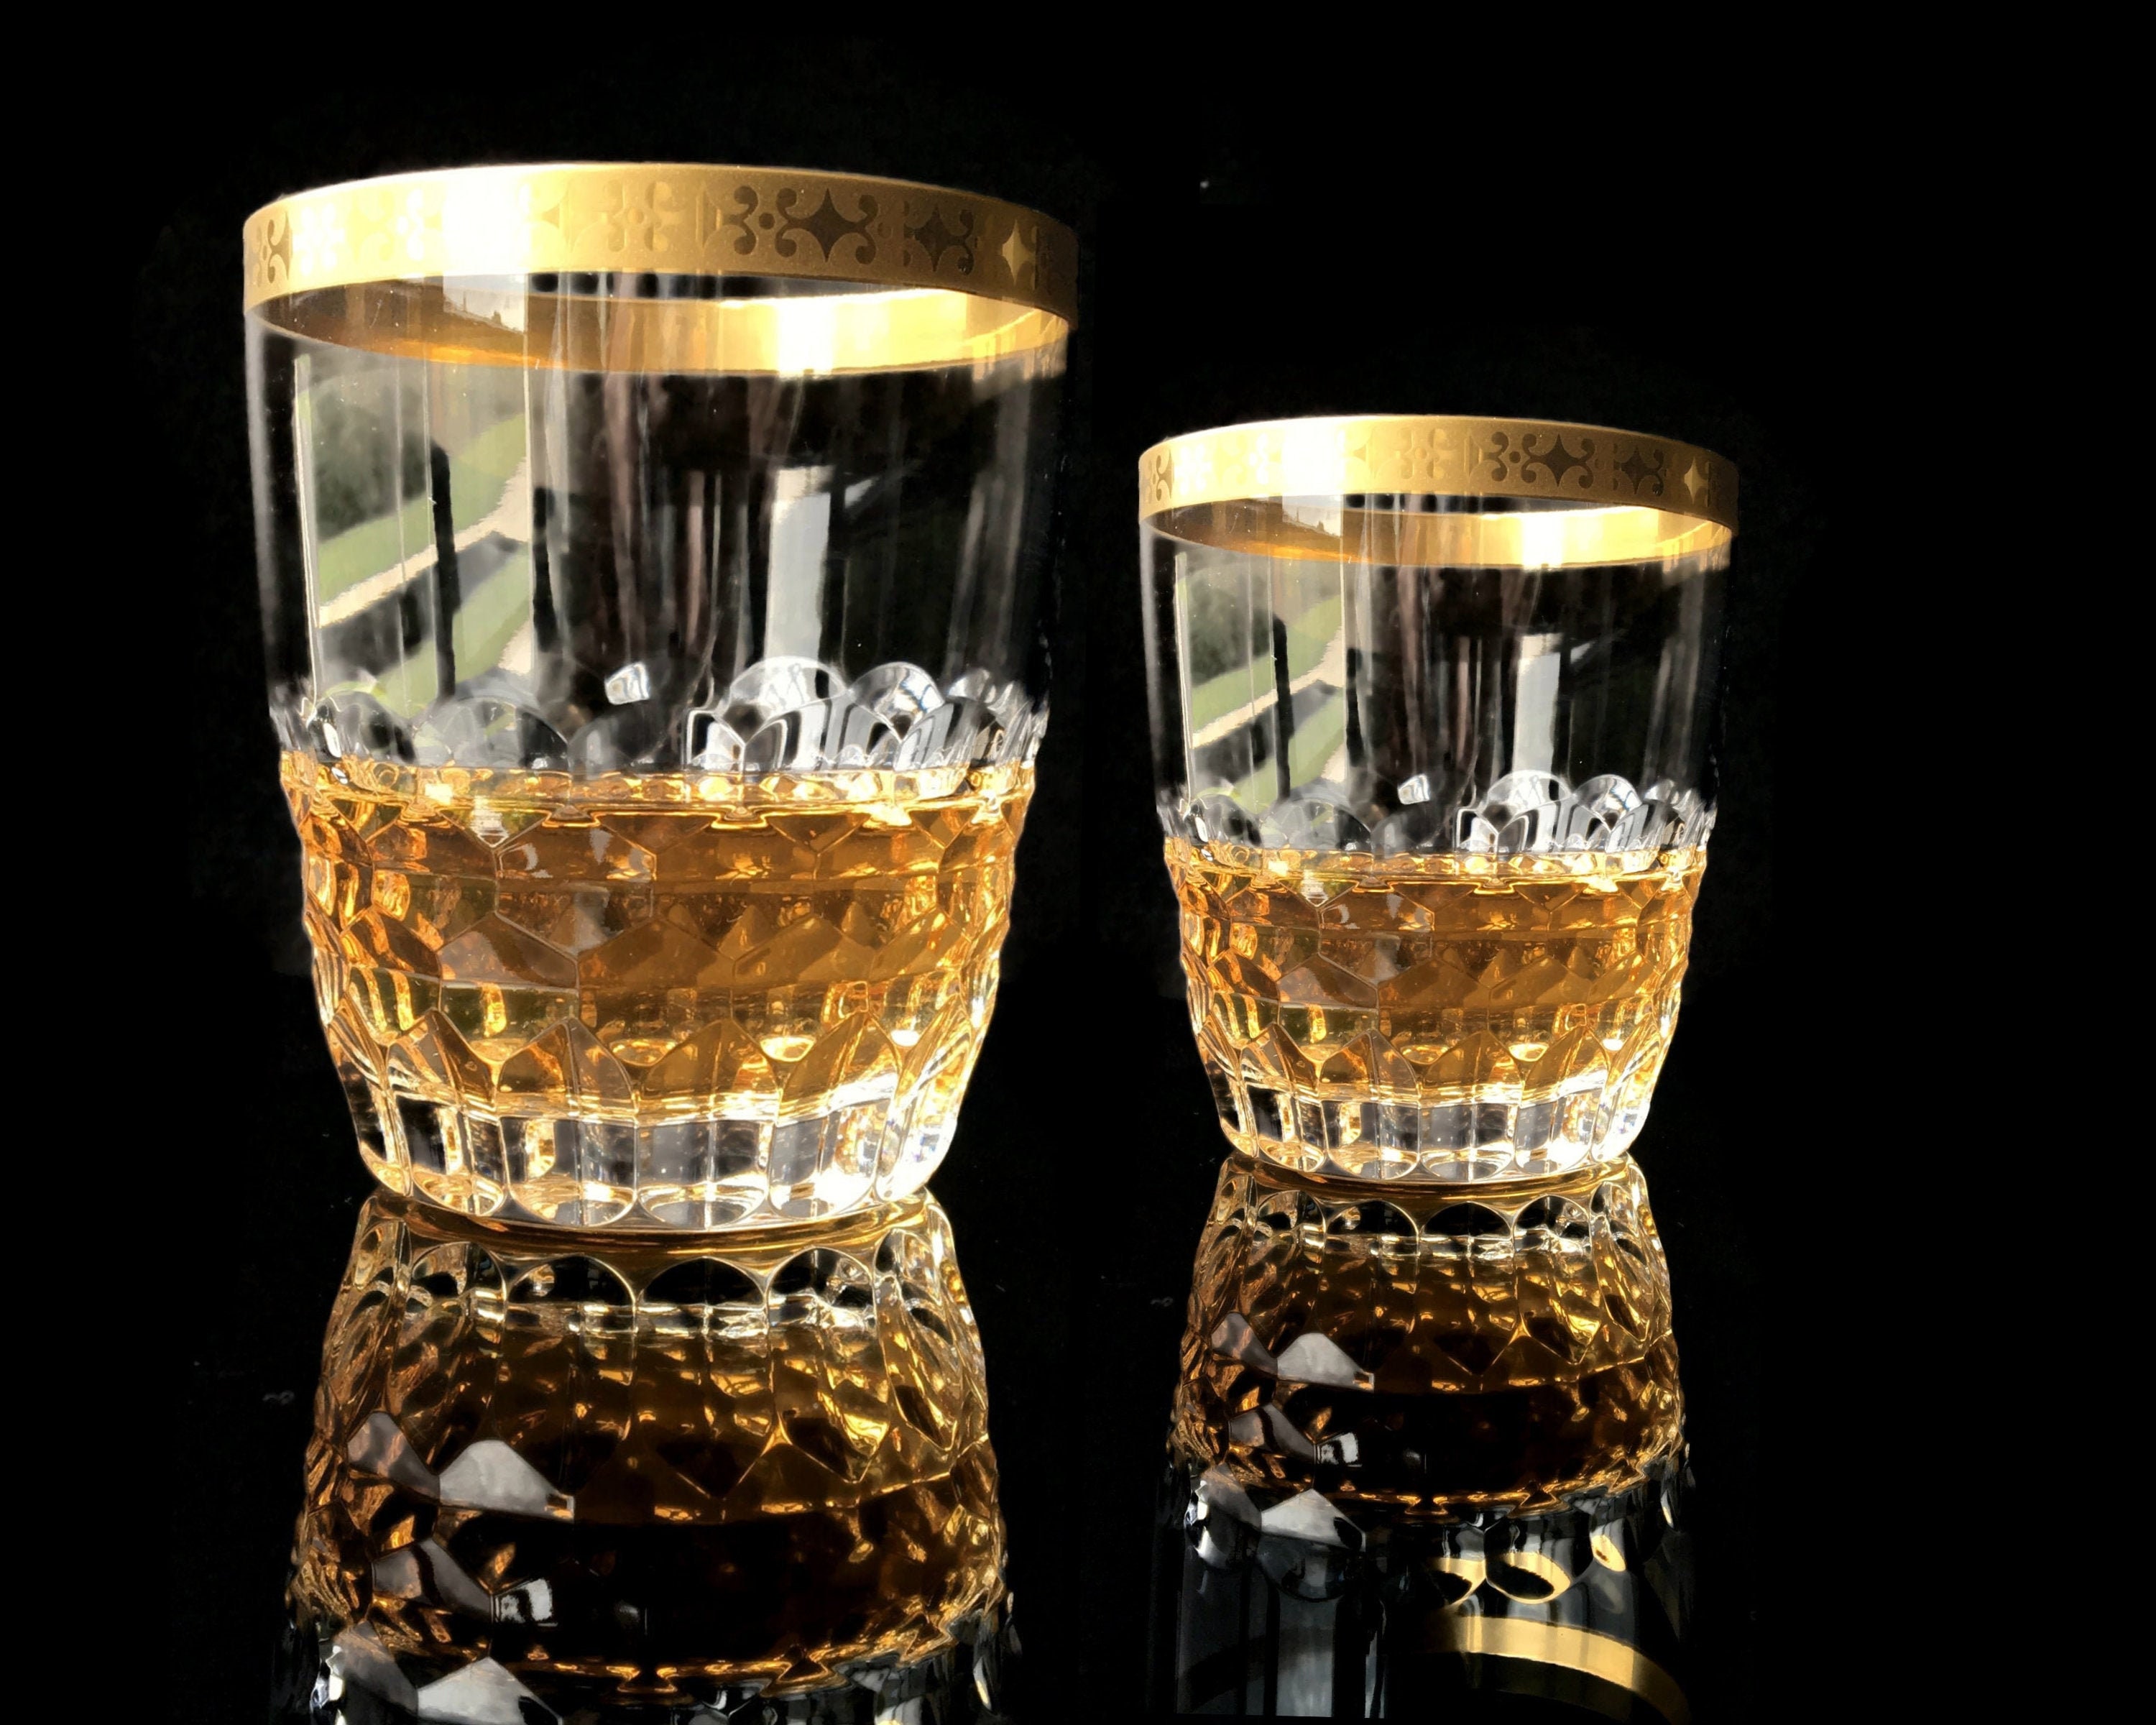 Viski Polyfaceted Crystal Wine Glasses, 2 pk - Fred Meyer